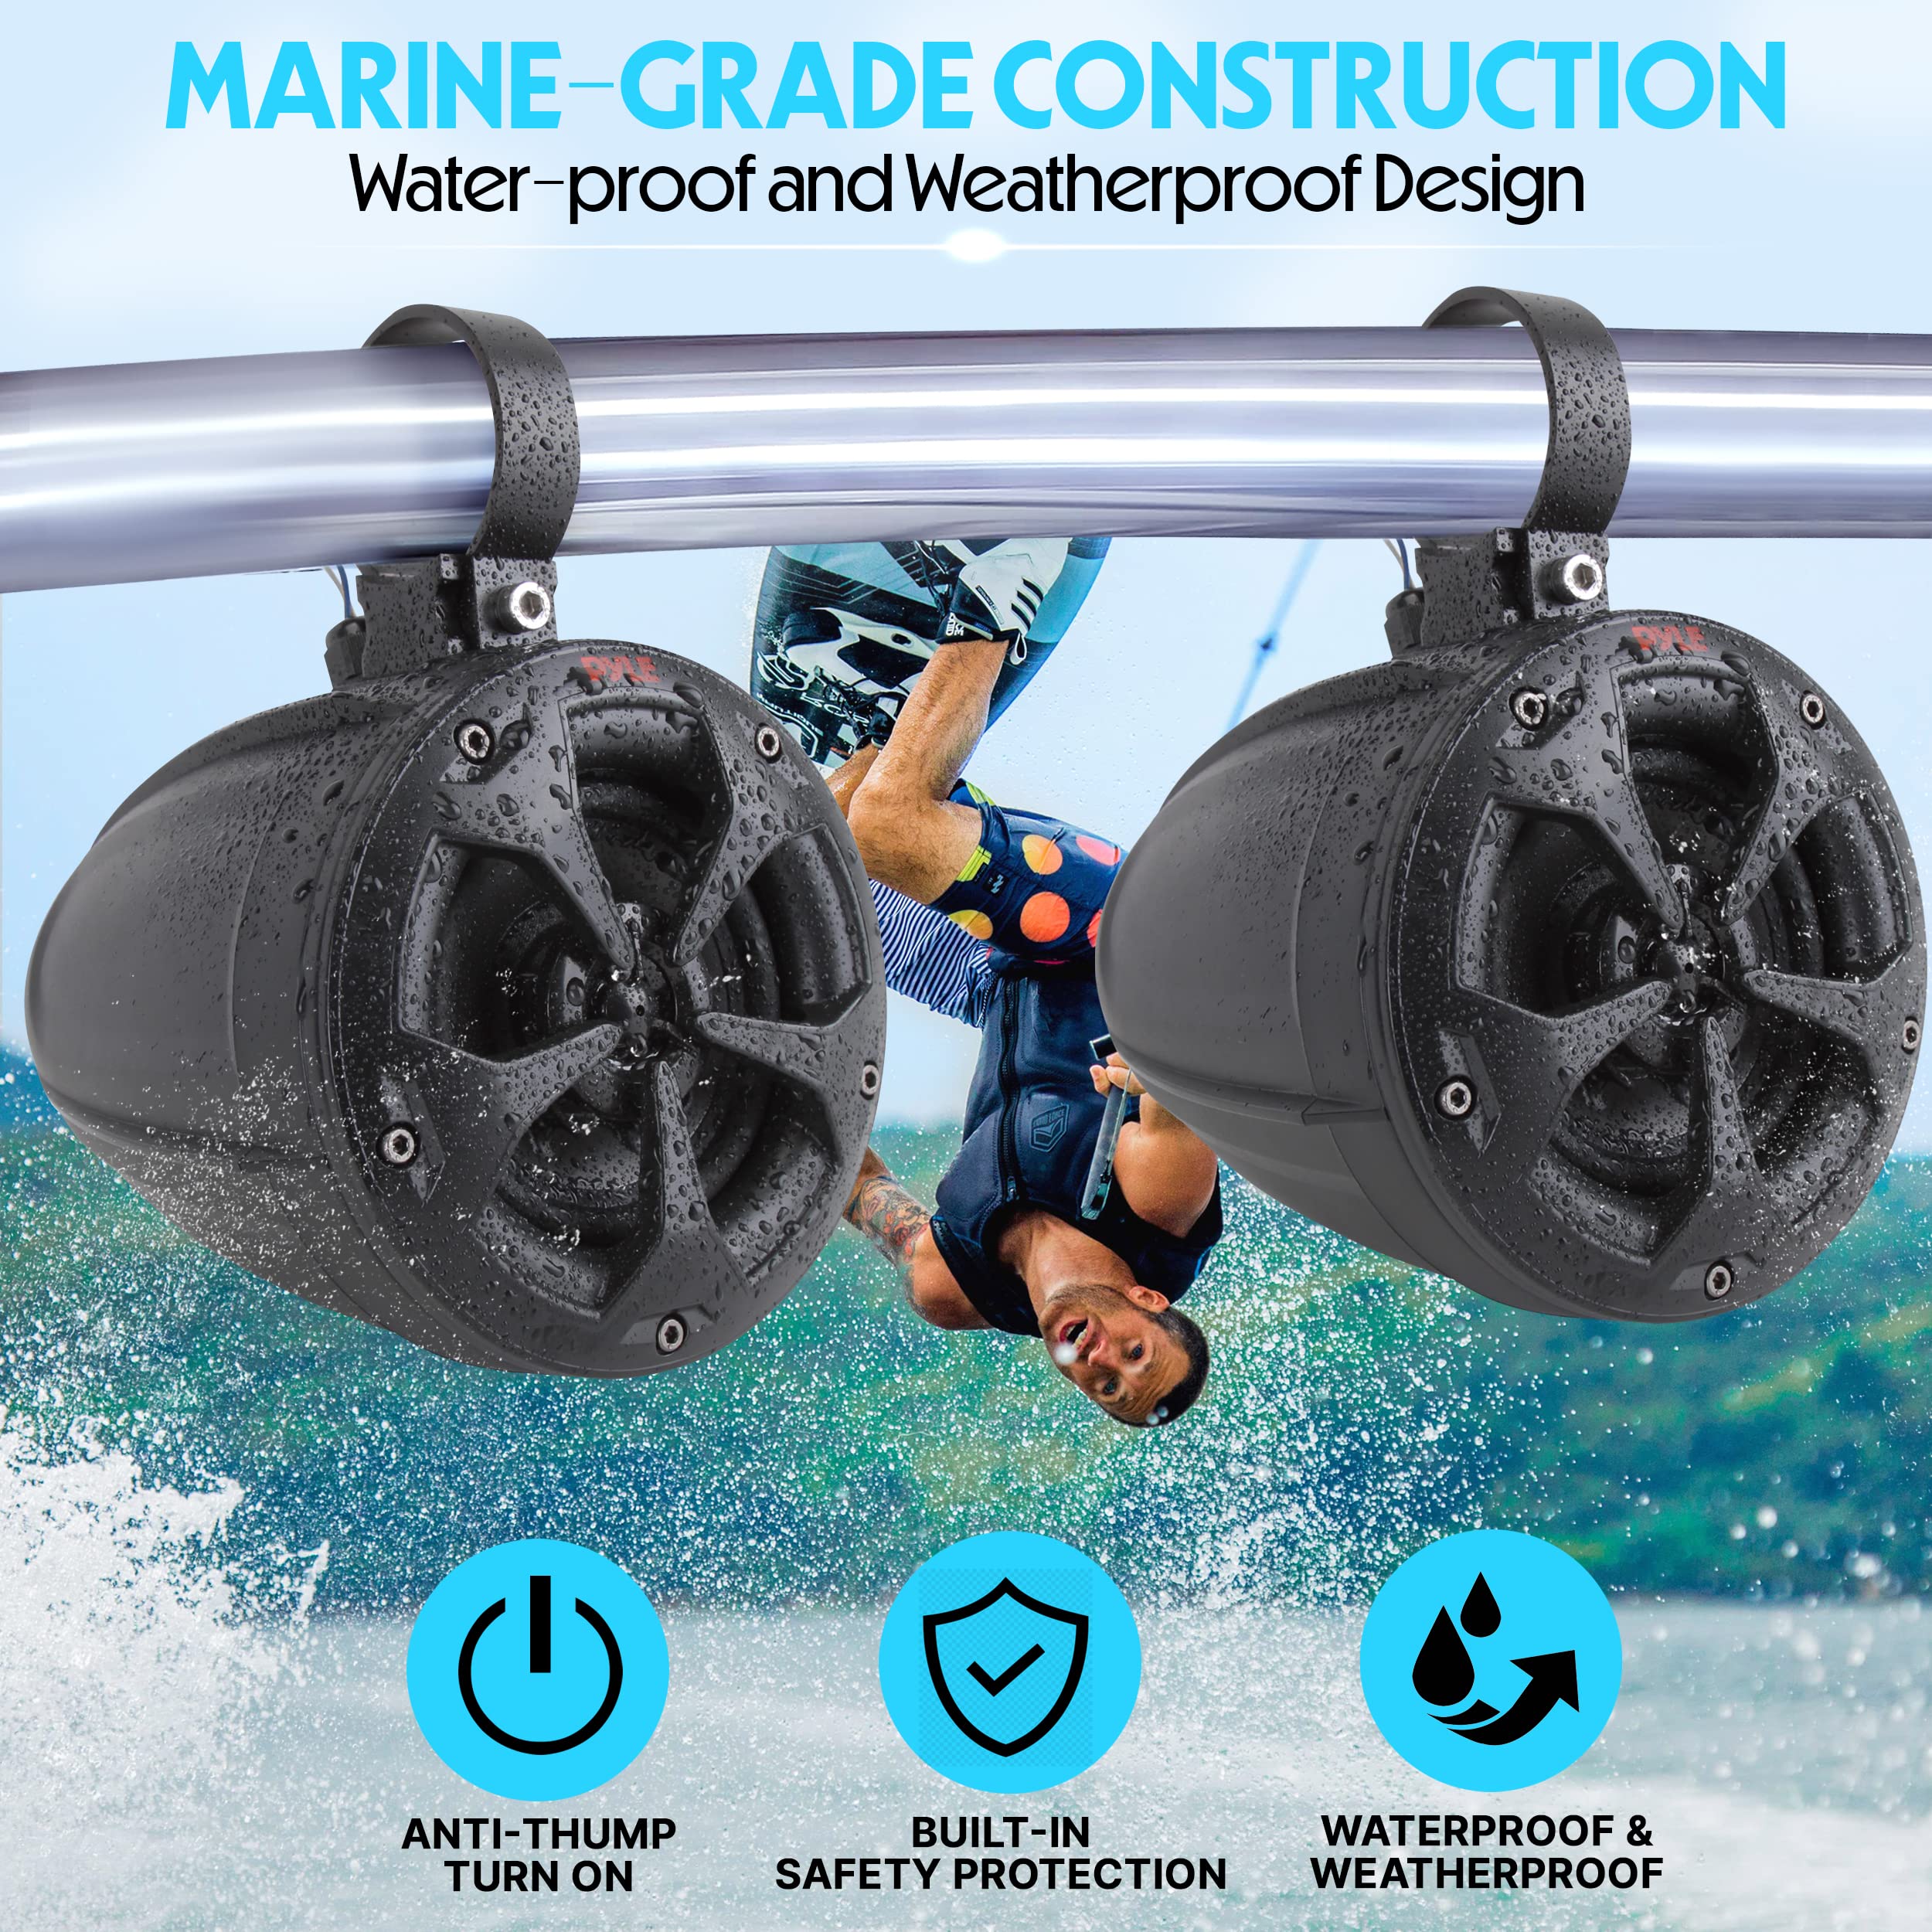 Pyle 2-Way Dual Bluetooth Off-Road Speakers - 4 Inch 800W Marine Waterproof Wakeboard, Full Range Outdoor for ATV, Snow Mobile UTV, Quad, Jeep, Boat PLUTV46BTA, Black